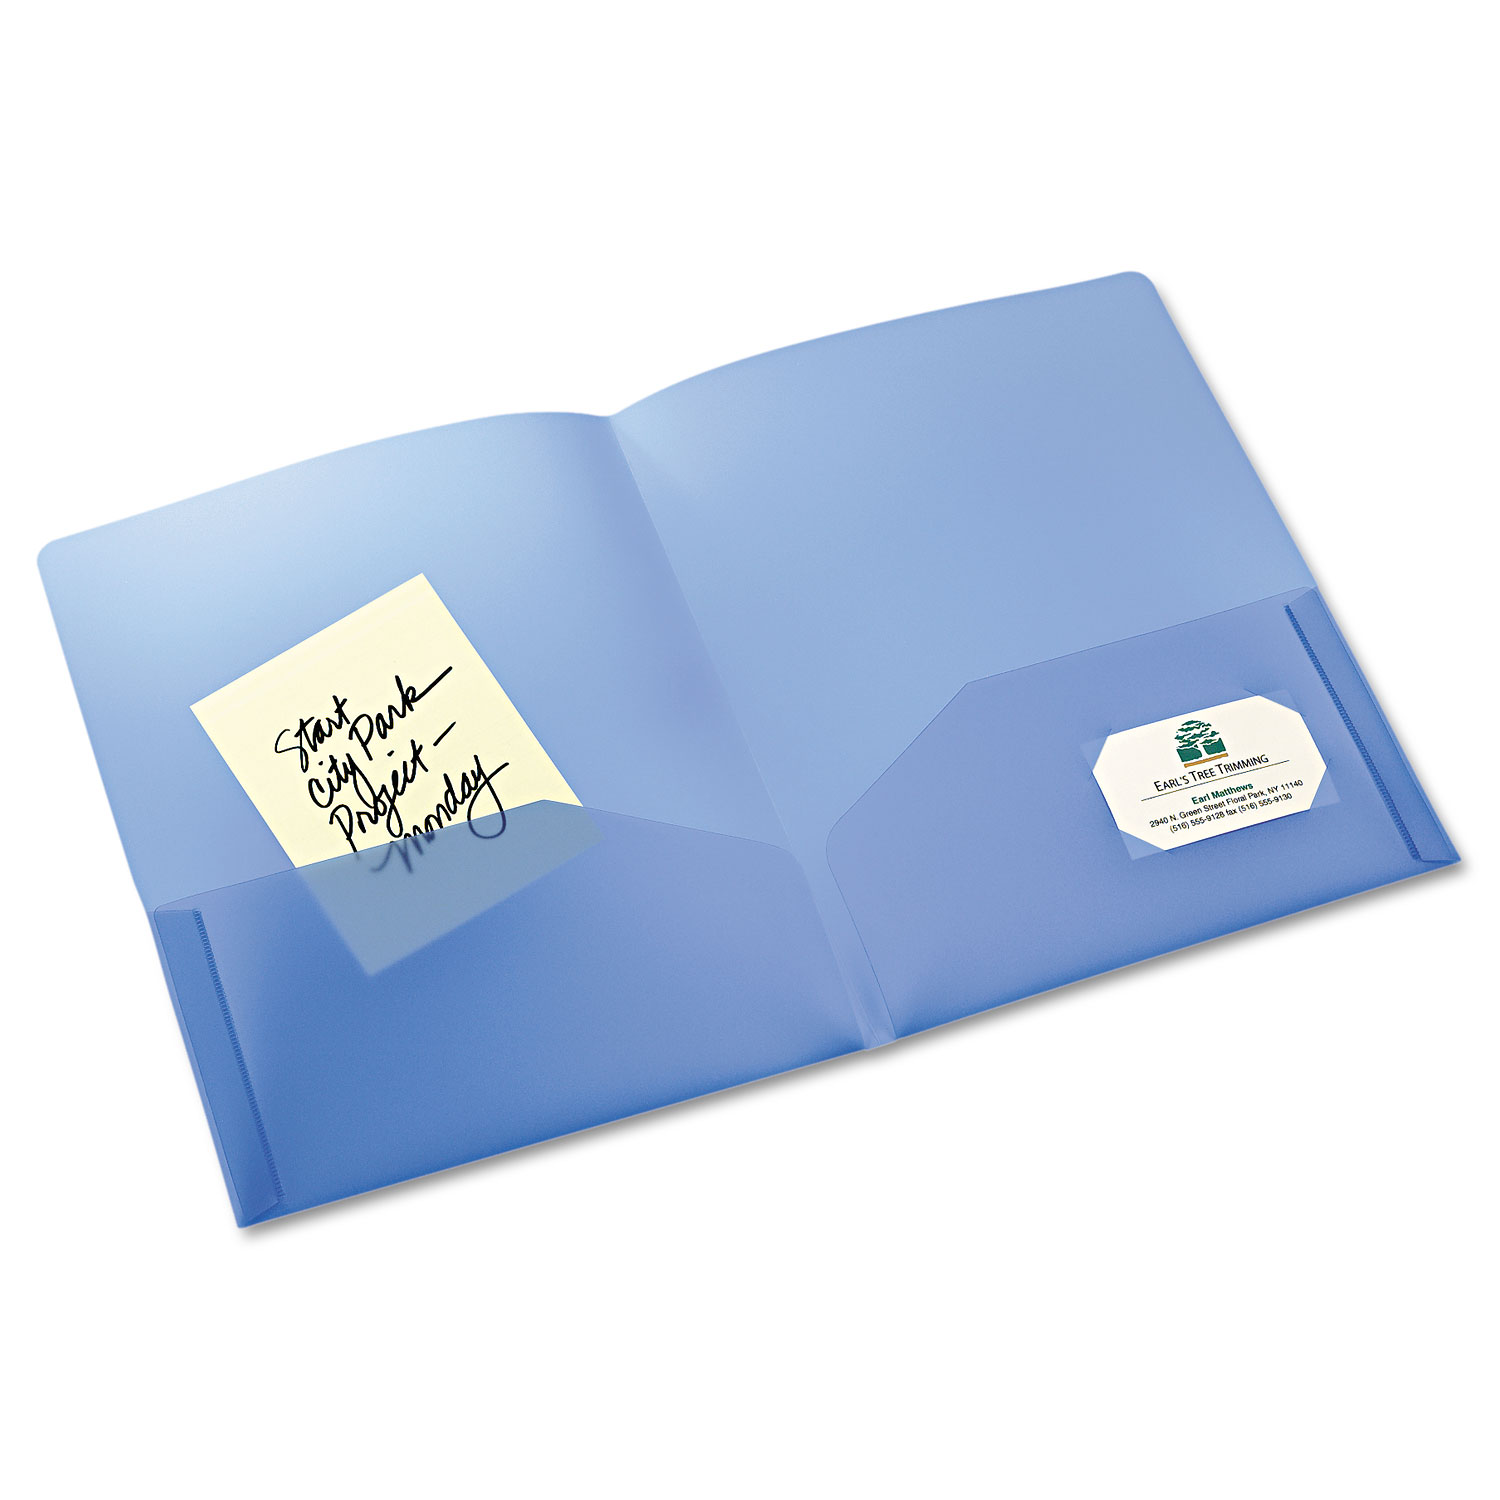 Plastic Two-Pocket Folder, 20-Sheet Capacity, Translucent Blue